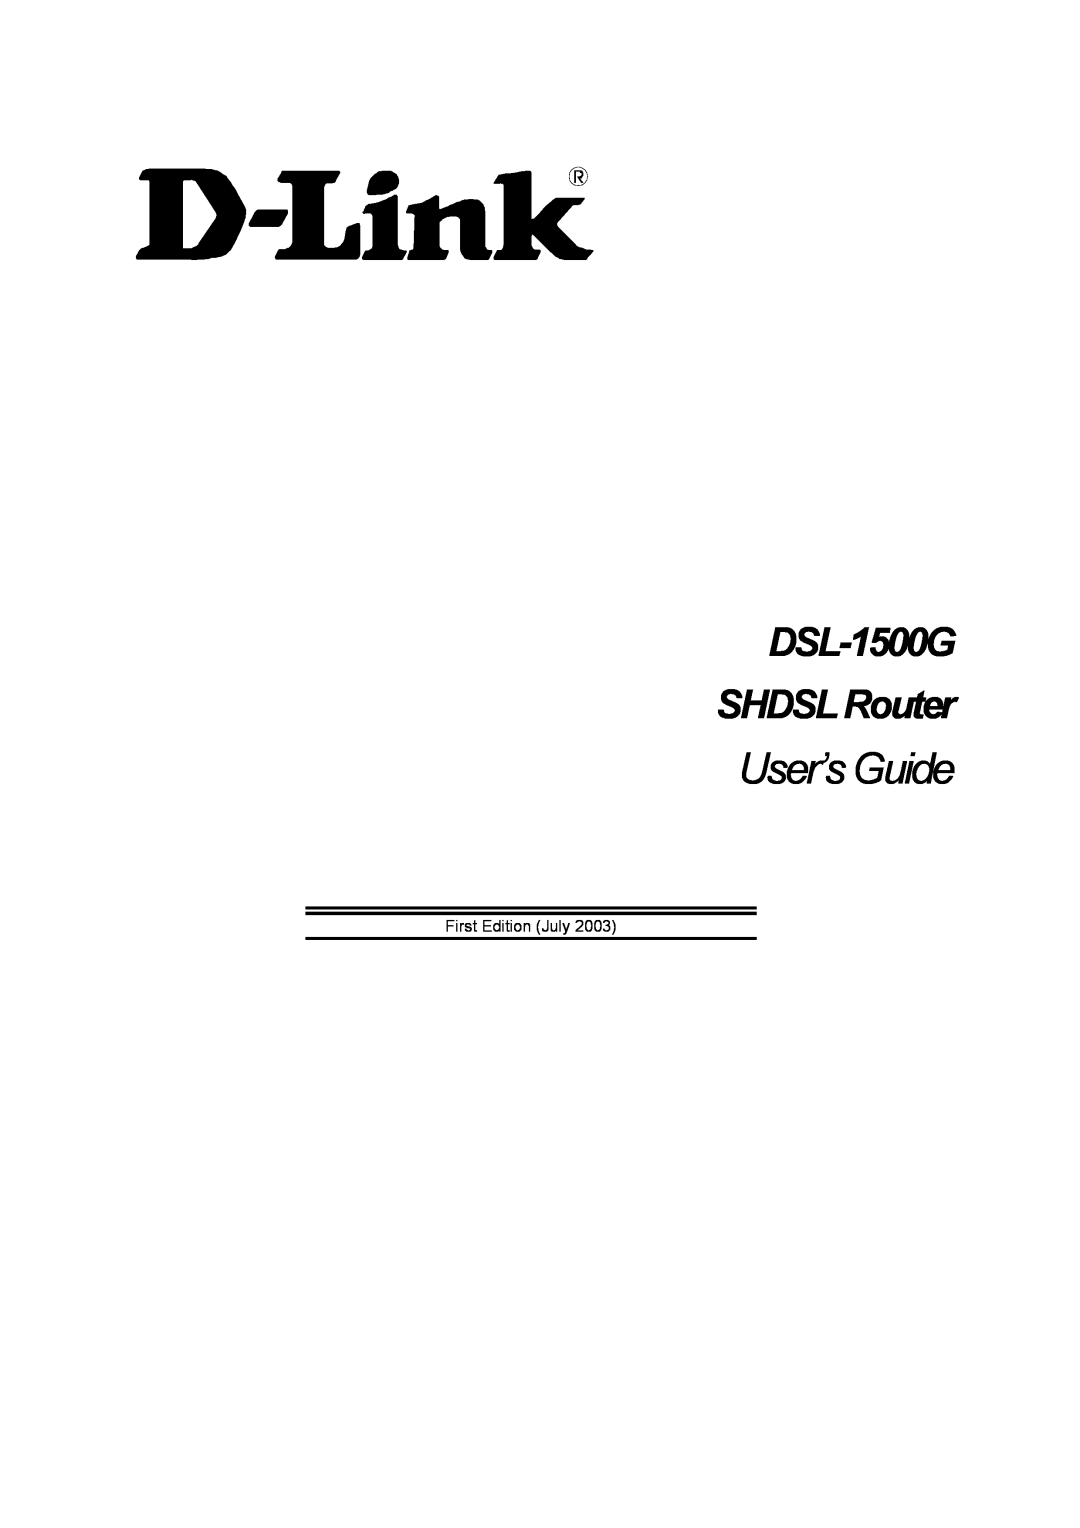 D-Link manual User’s Guide, DSL-1500G SHDSLRouter 